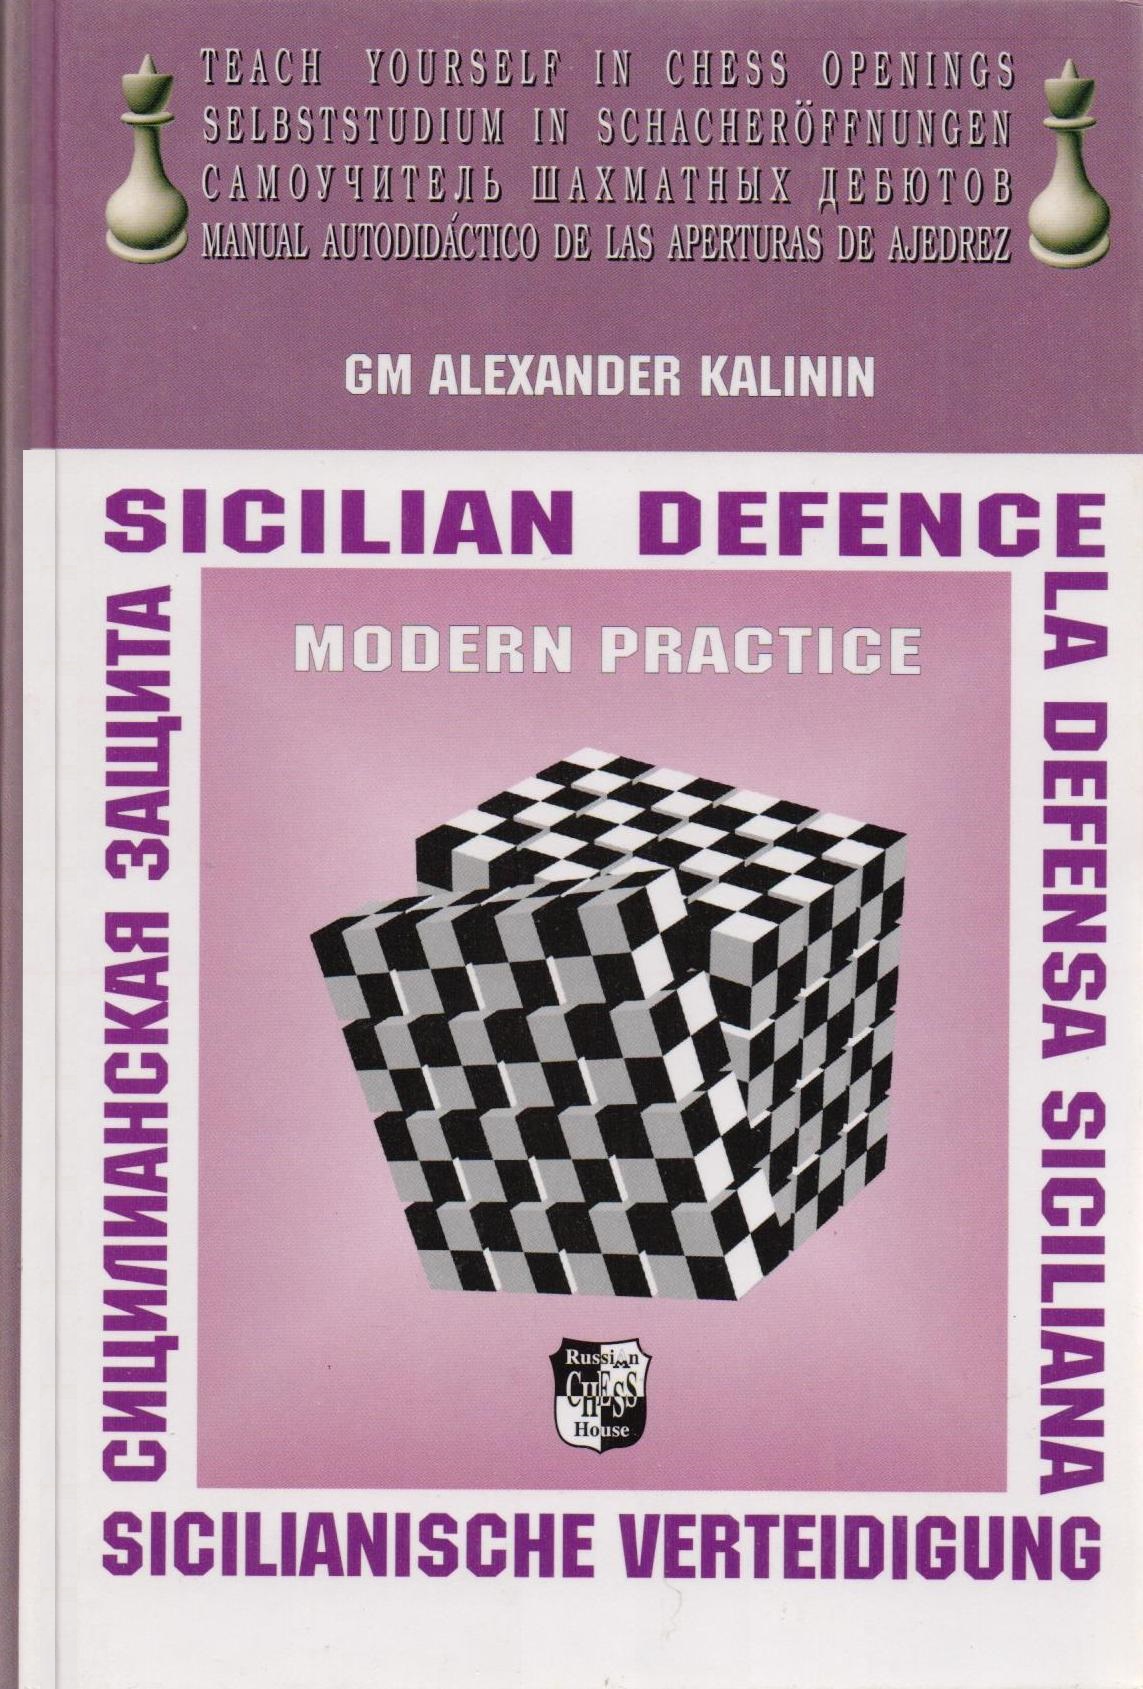 CLEARANCE - Sicilian Defense in the Last Decade